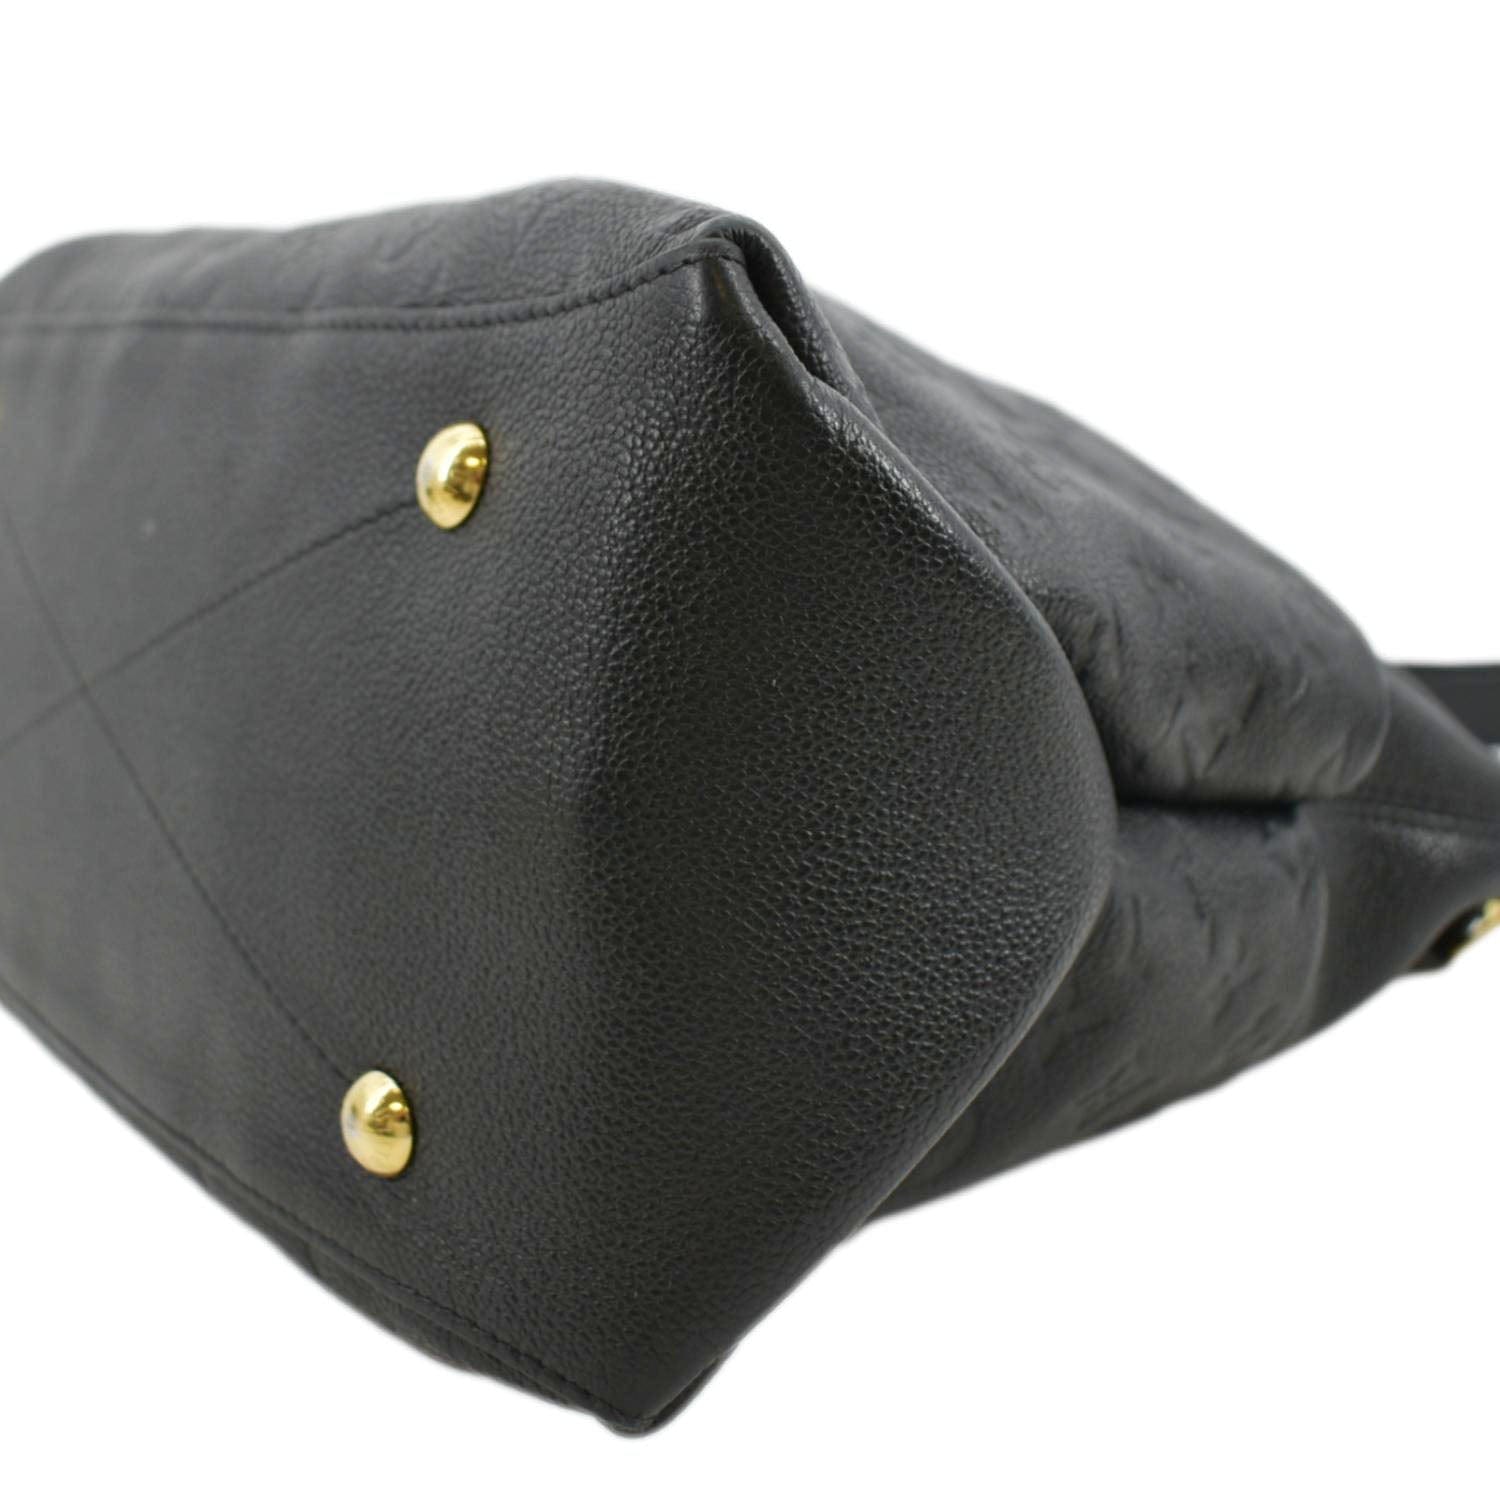 LV - Black Nylon & Leather Tote Bag